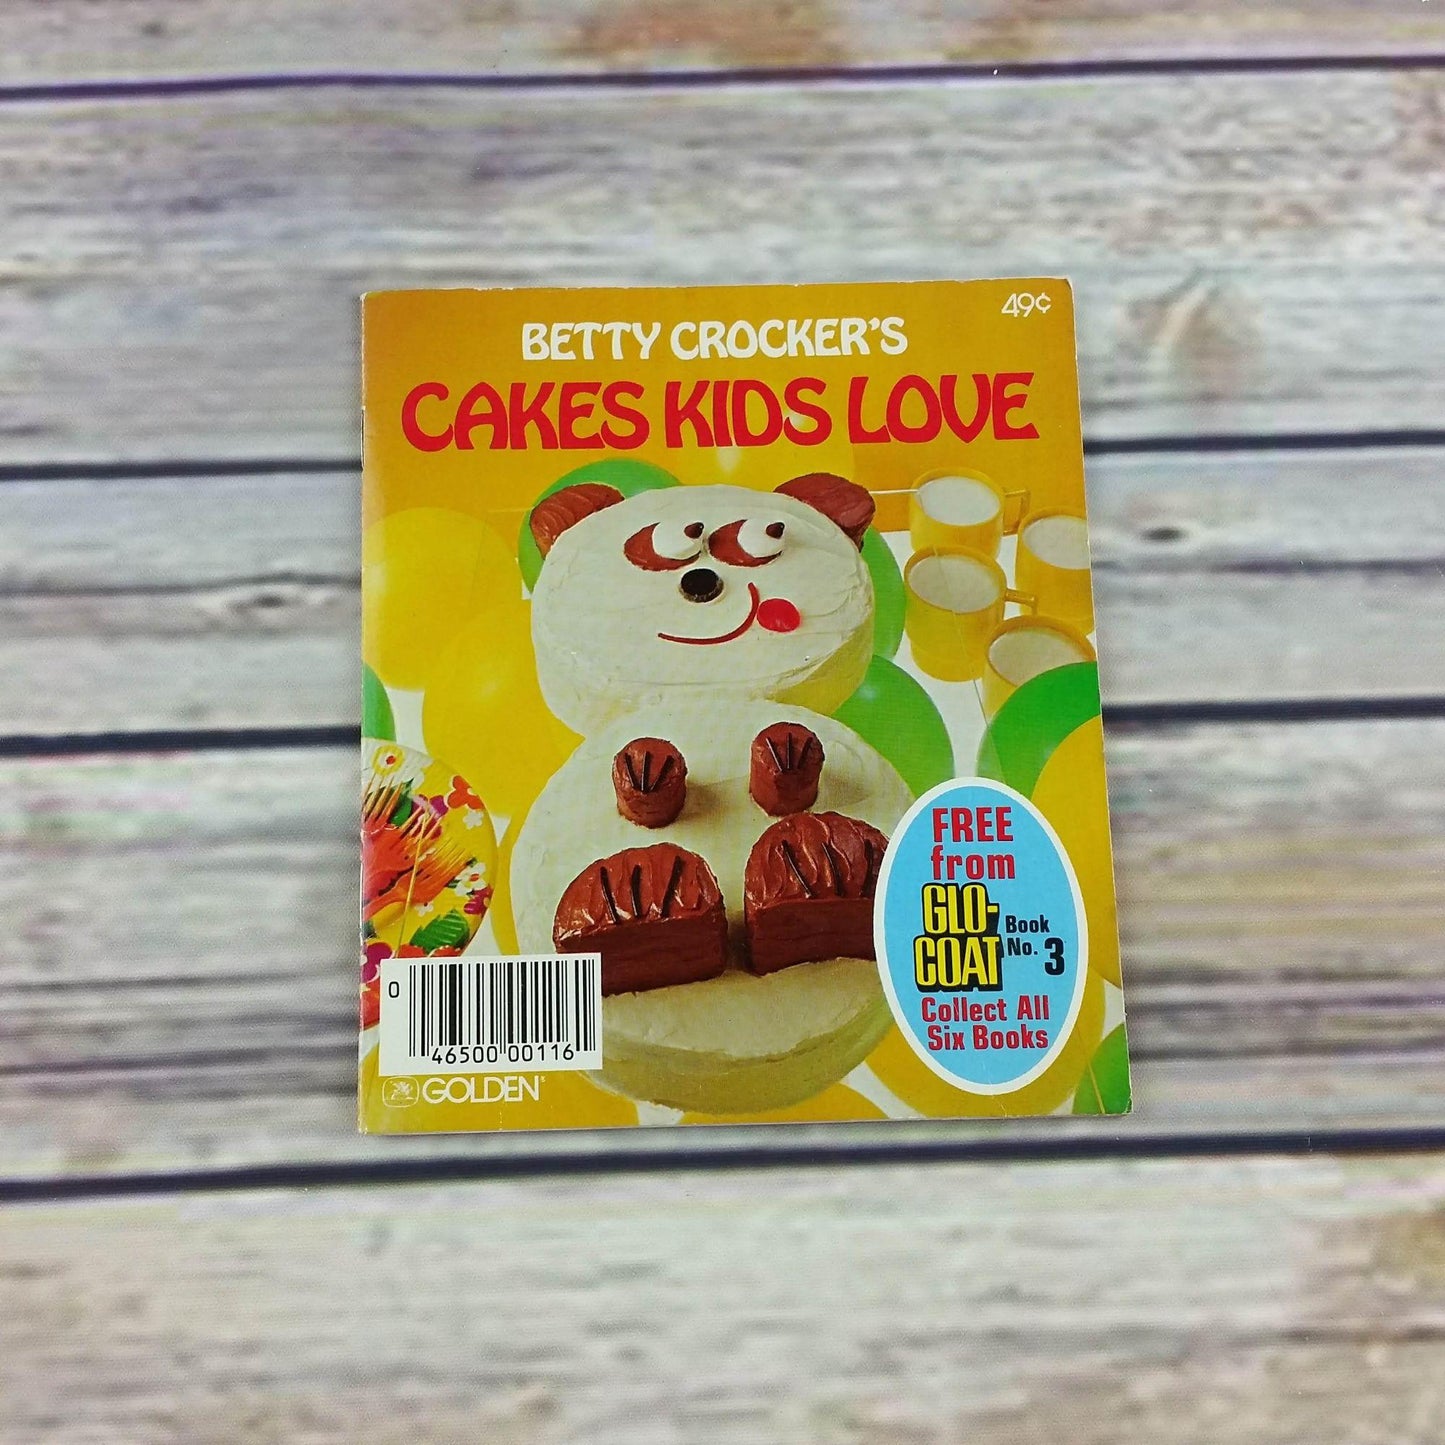 Vintage Cakes Kids Love Cookbook Betty Crocker 1976 Recipes Golden Book Booklet Ads